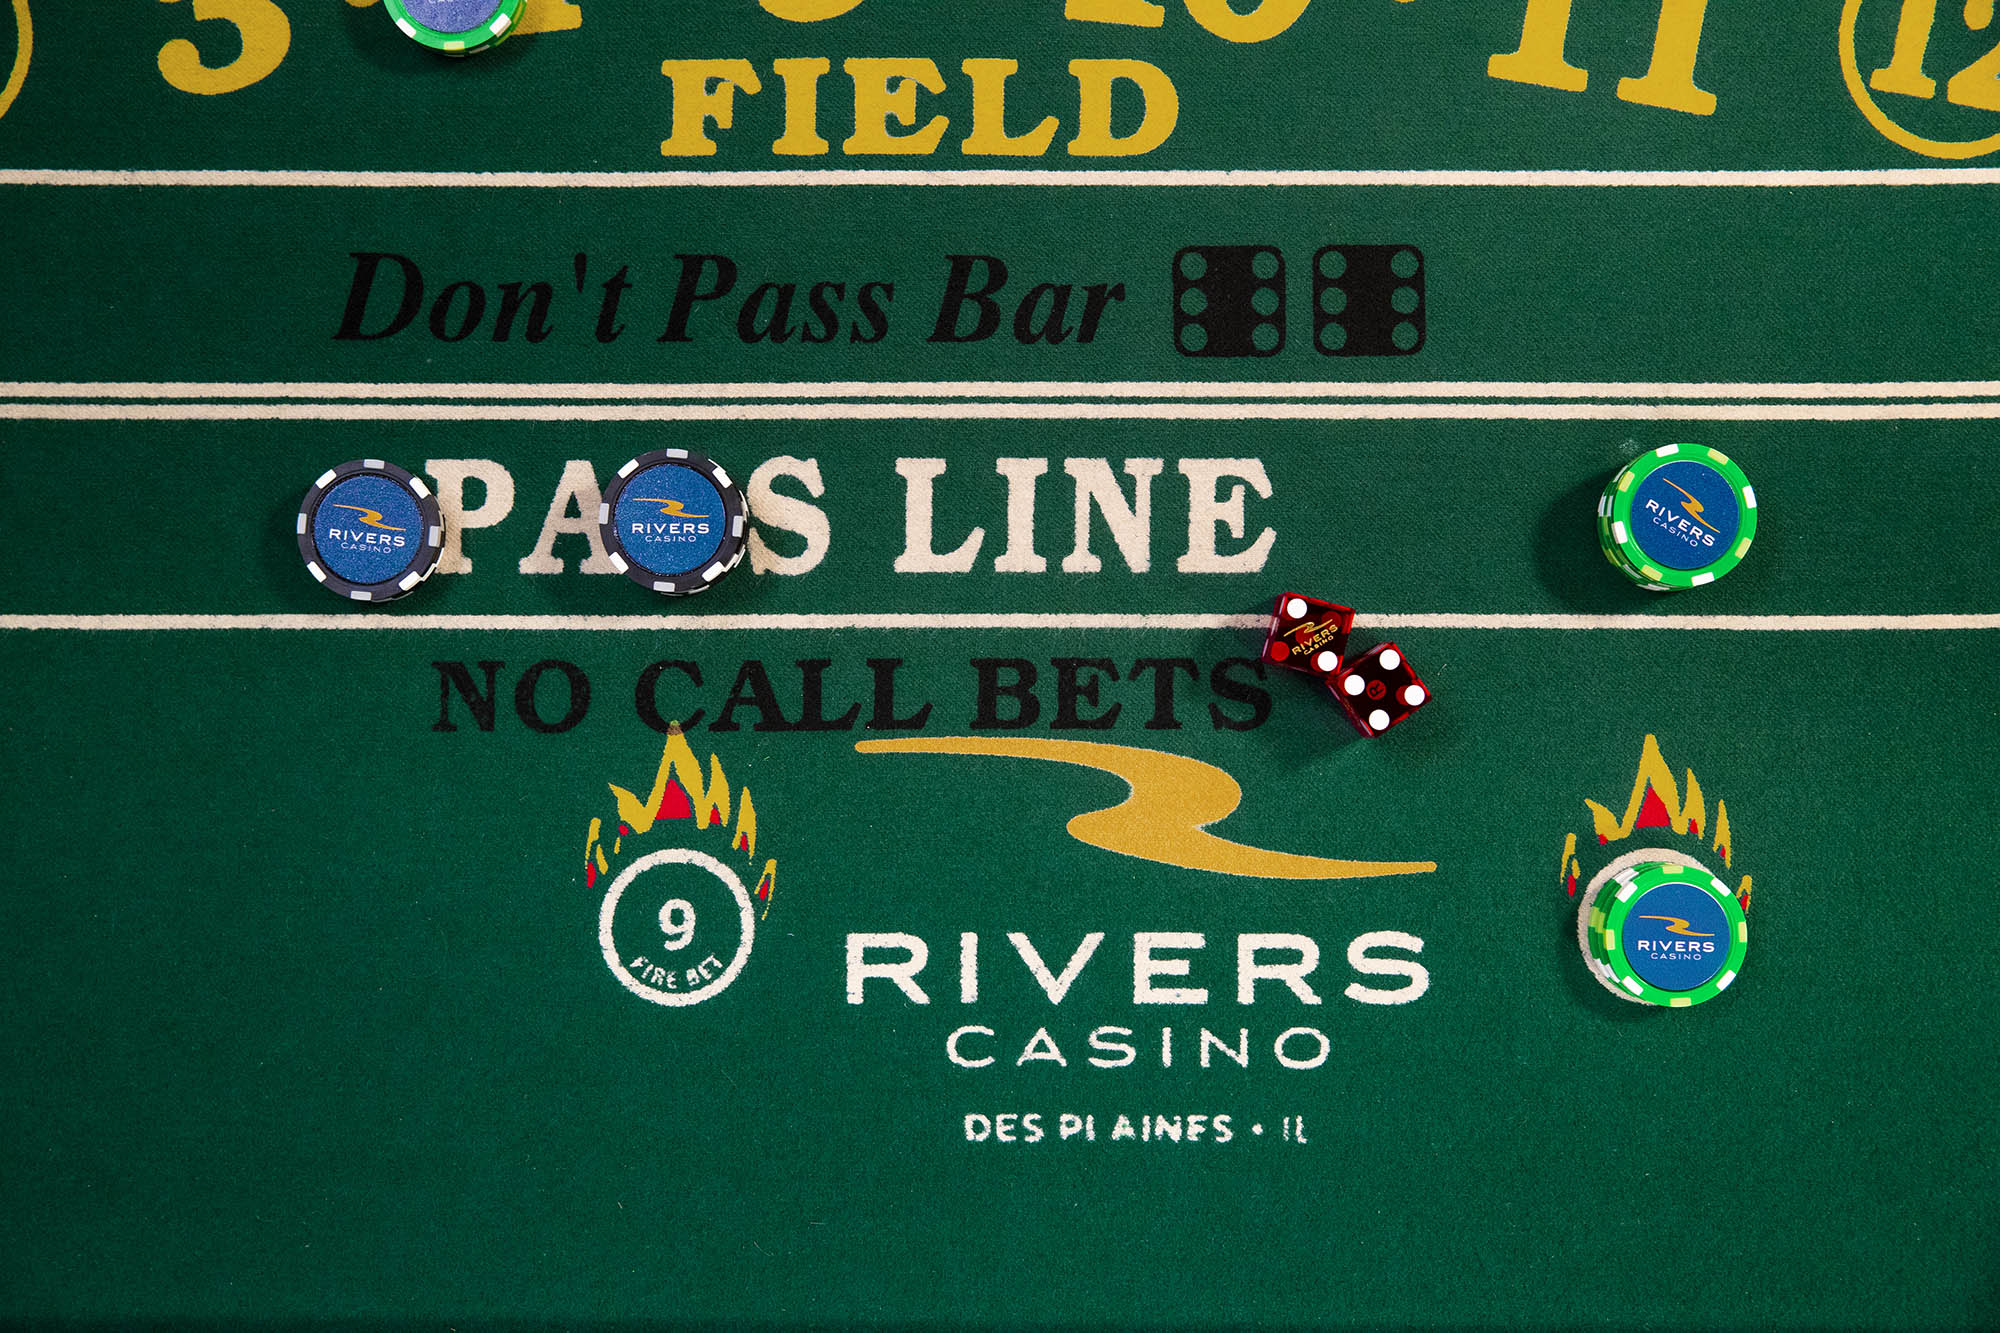 2 rivers casino rosemont